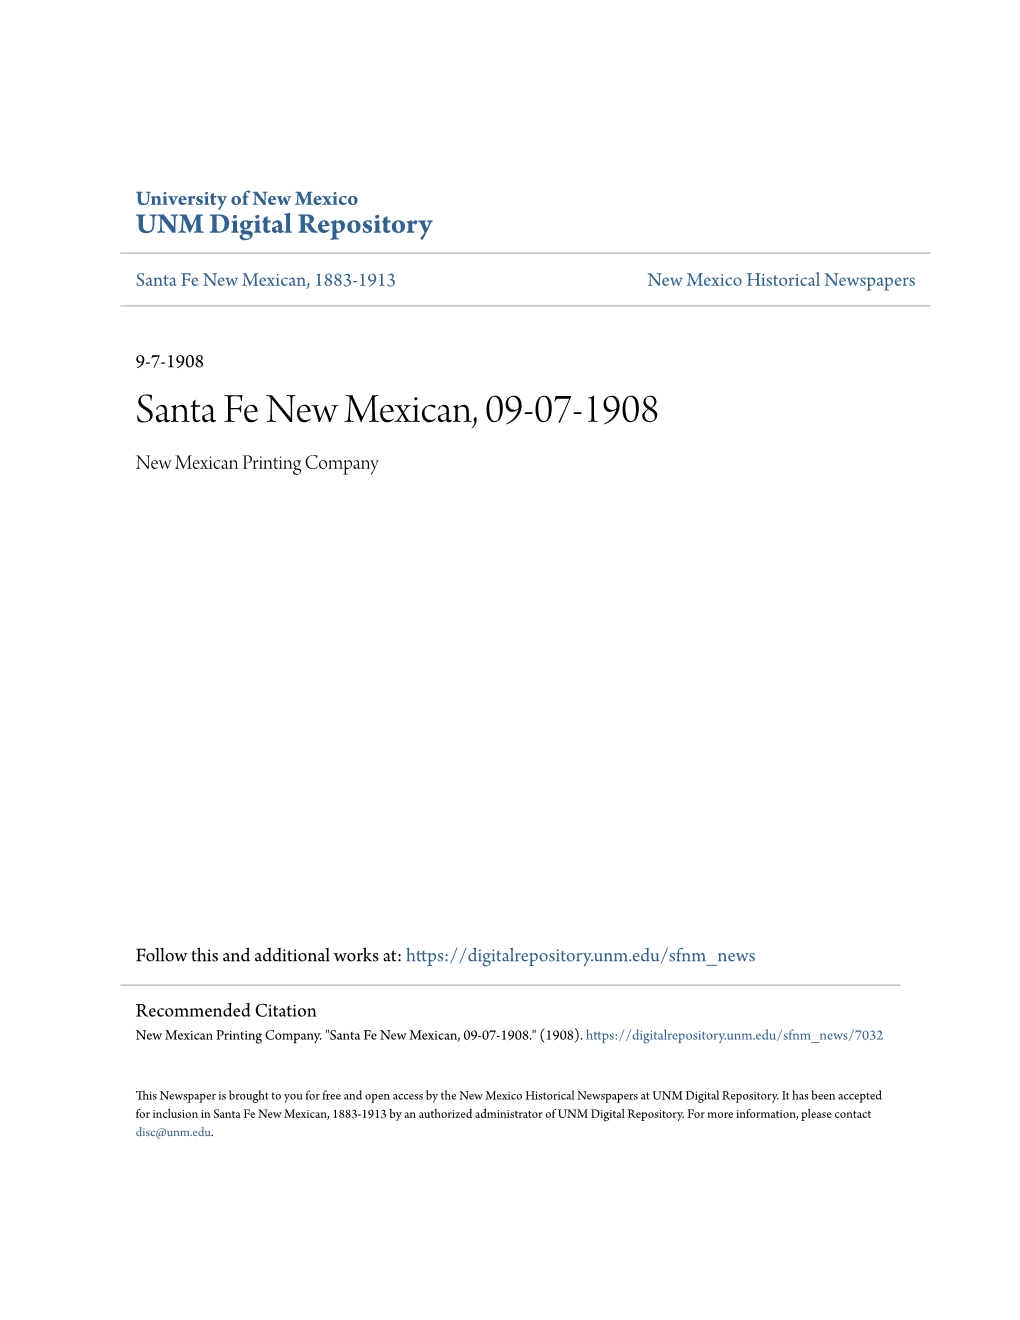 Santa Fe New Mexican, 09-07-1908 New Mexican Printing Company